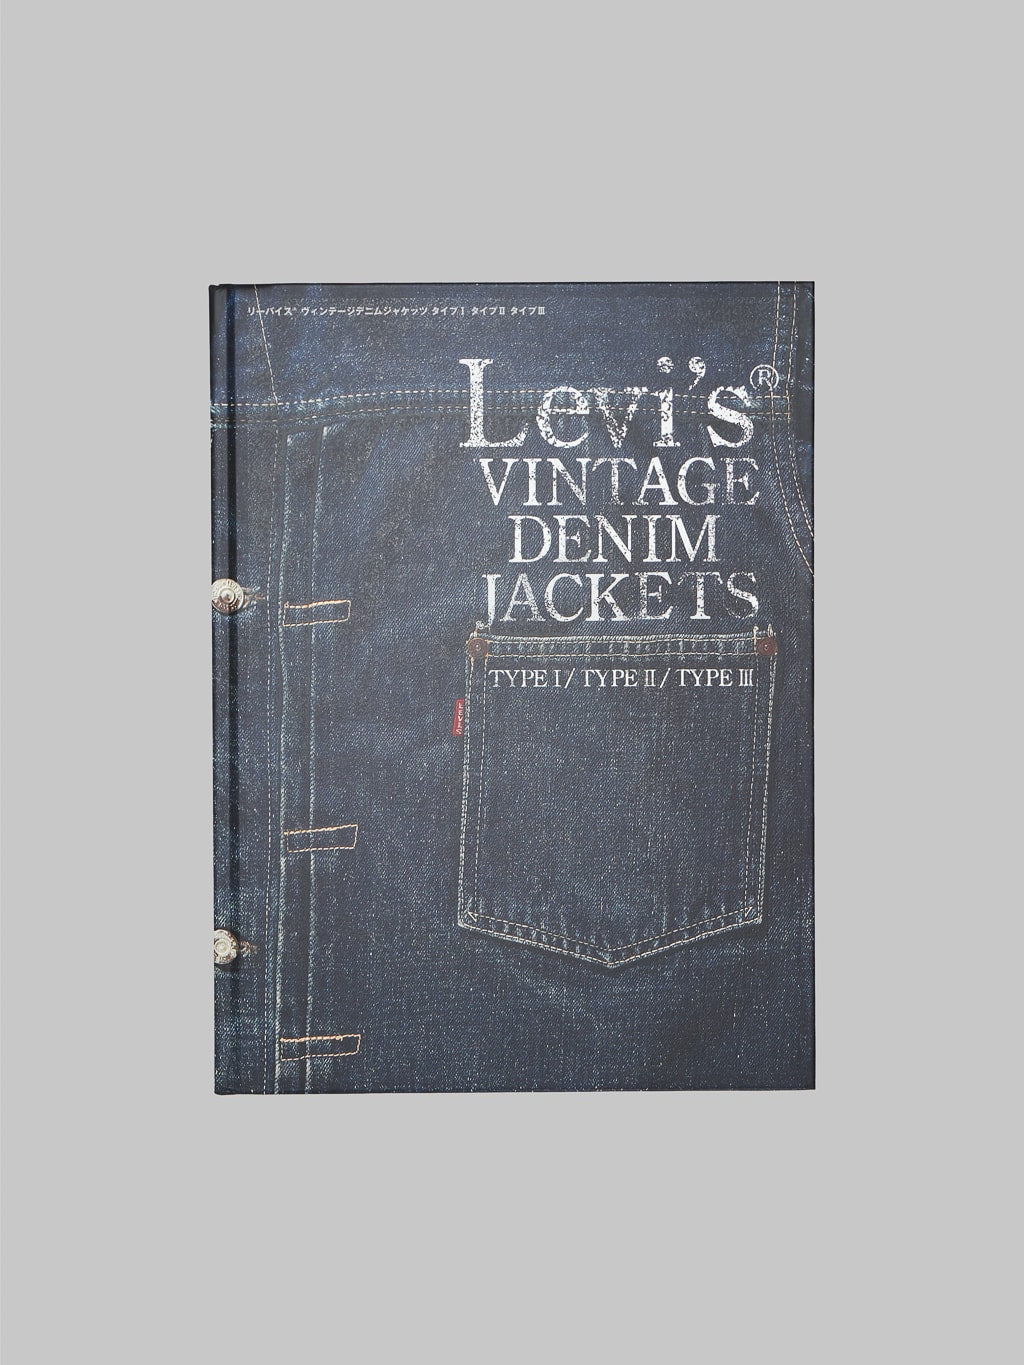 Levis Vintage Denim Jackets Book Iconic Cover 